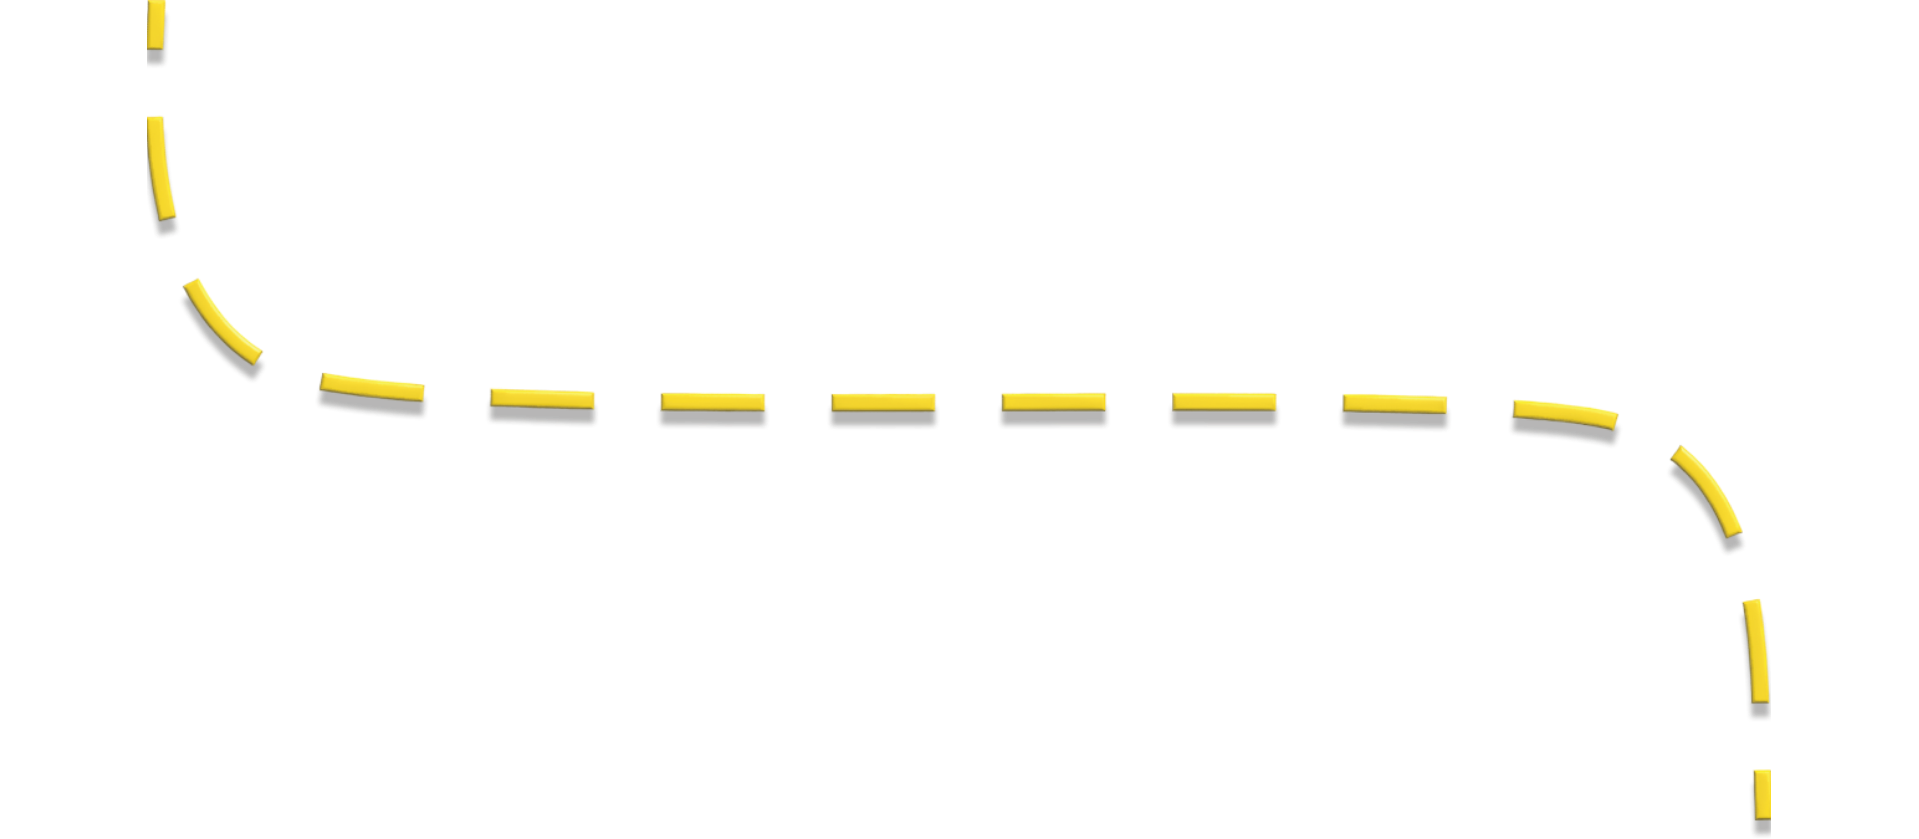 yellow line trail